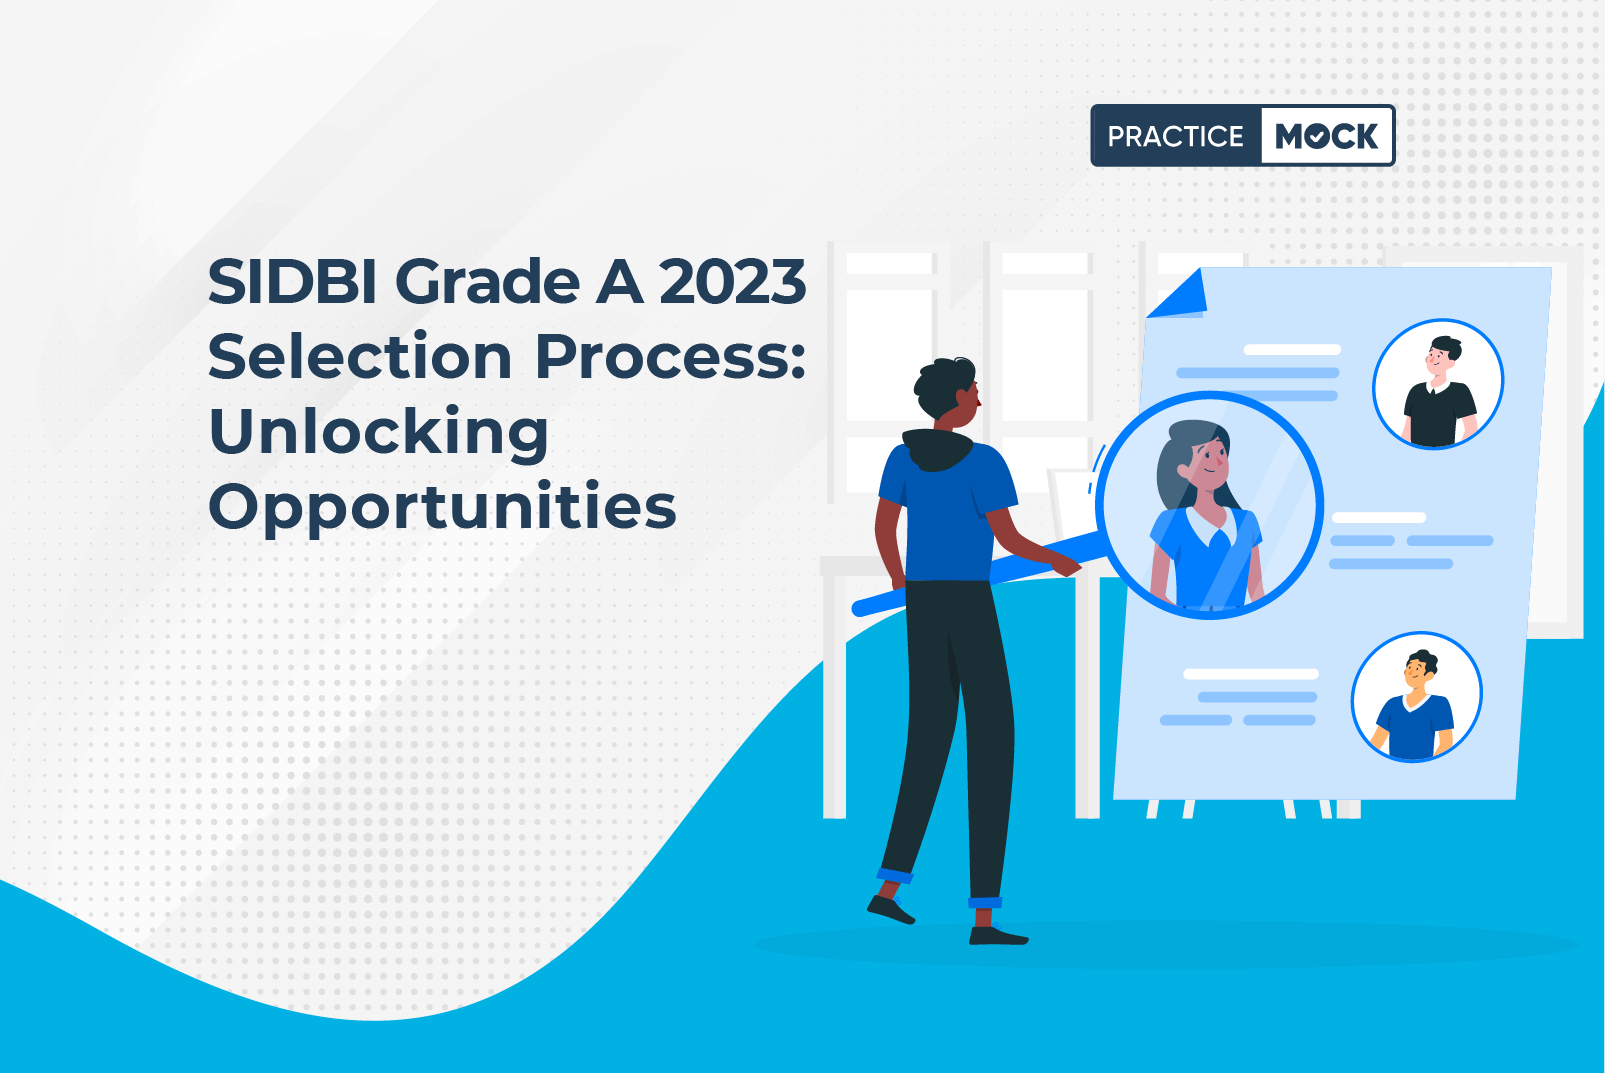 SIDBI Grade A 2023 Selection Process: Unlocking Opportunities